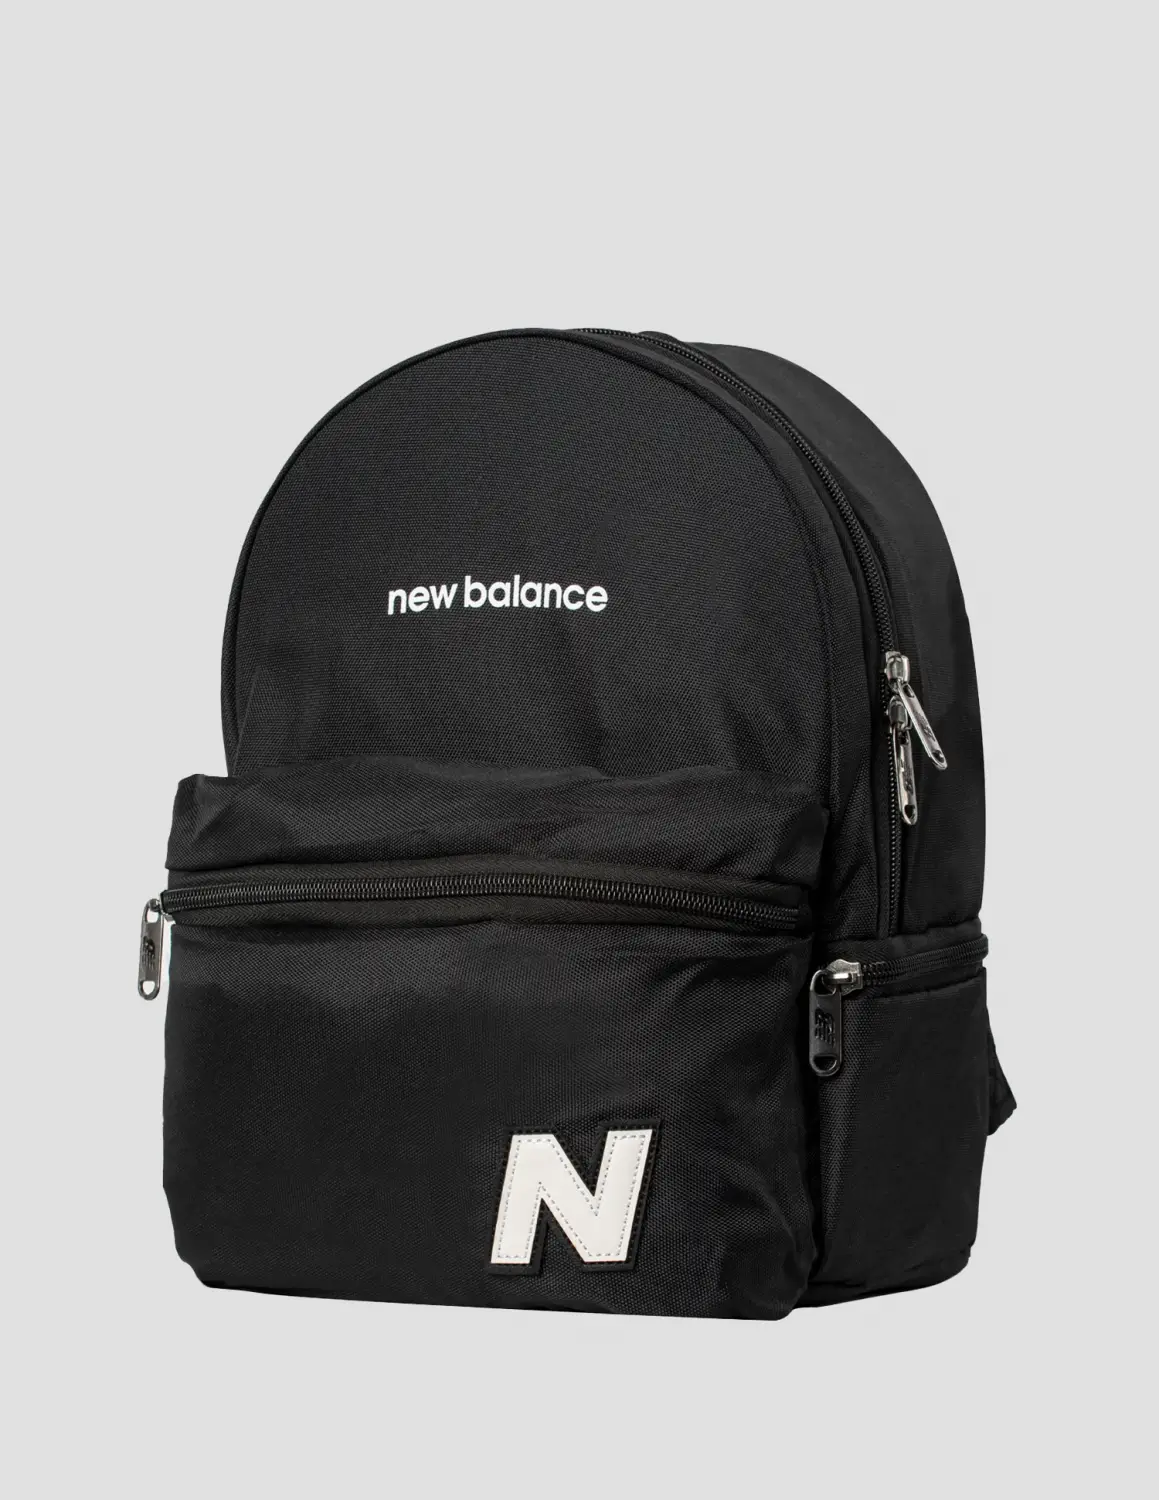 New Balance Siyah Unisex Sırt Çantası - NBBP225-BK